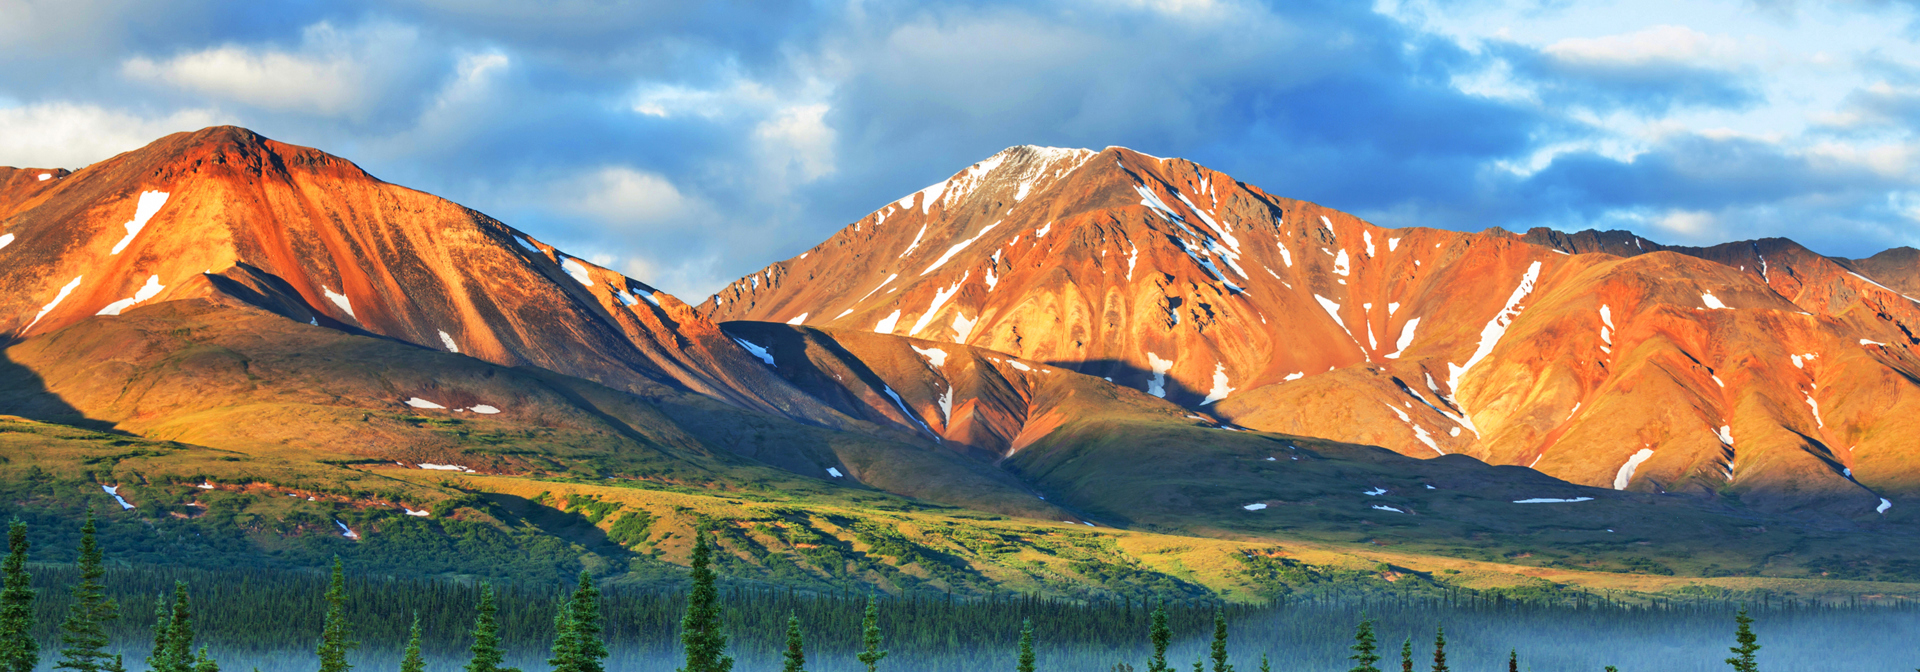 denali national park_alaska range_bjerge_02